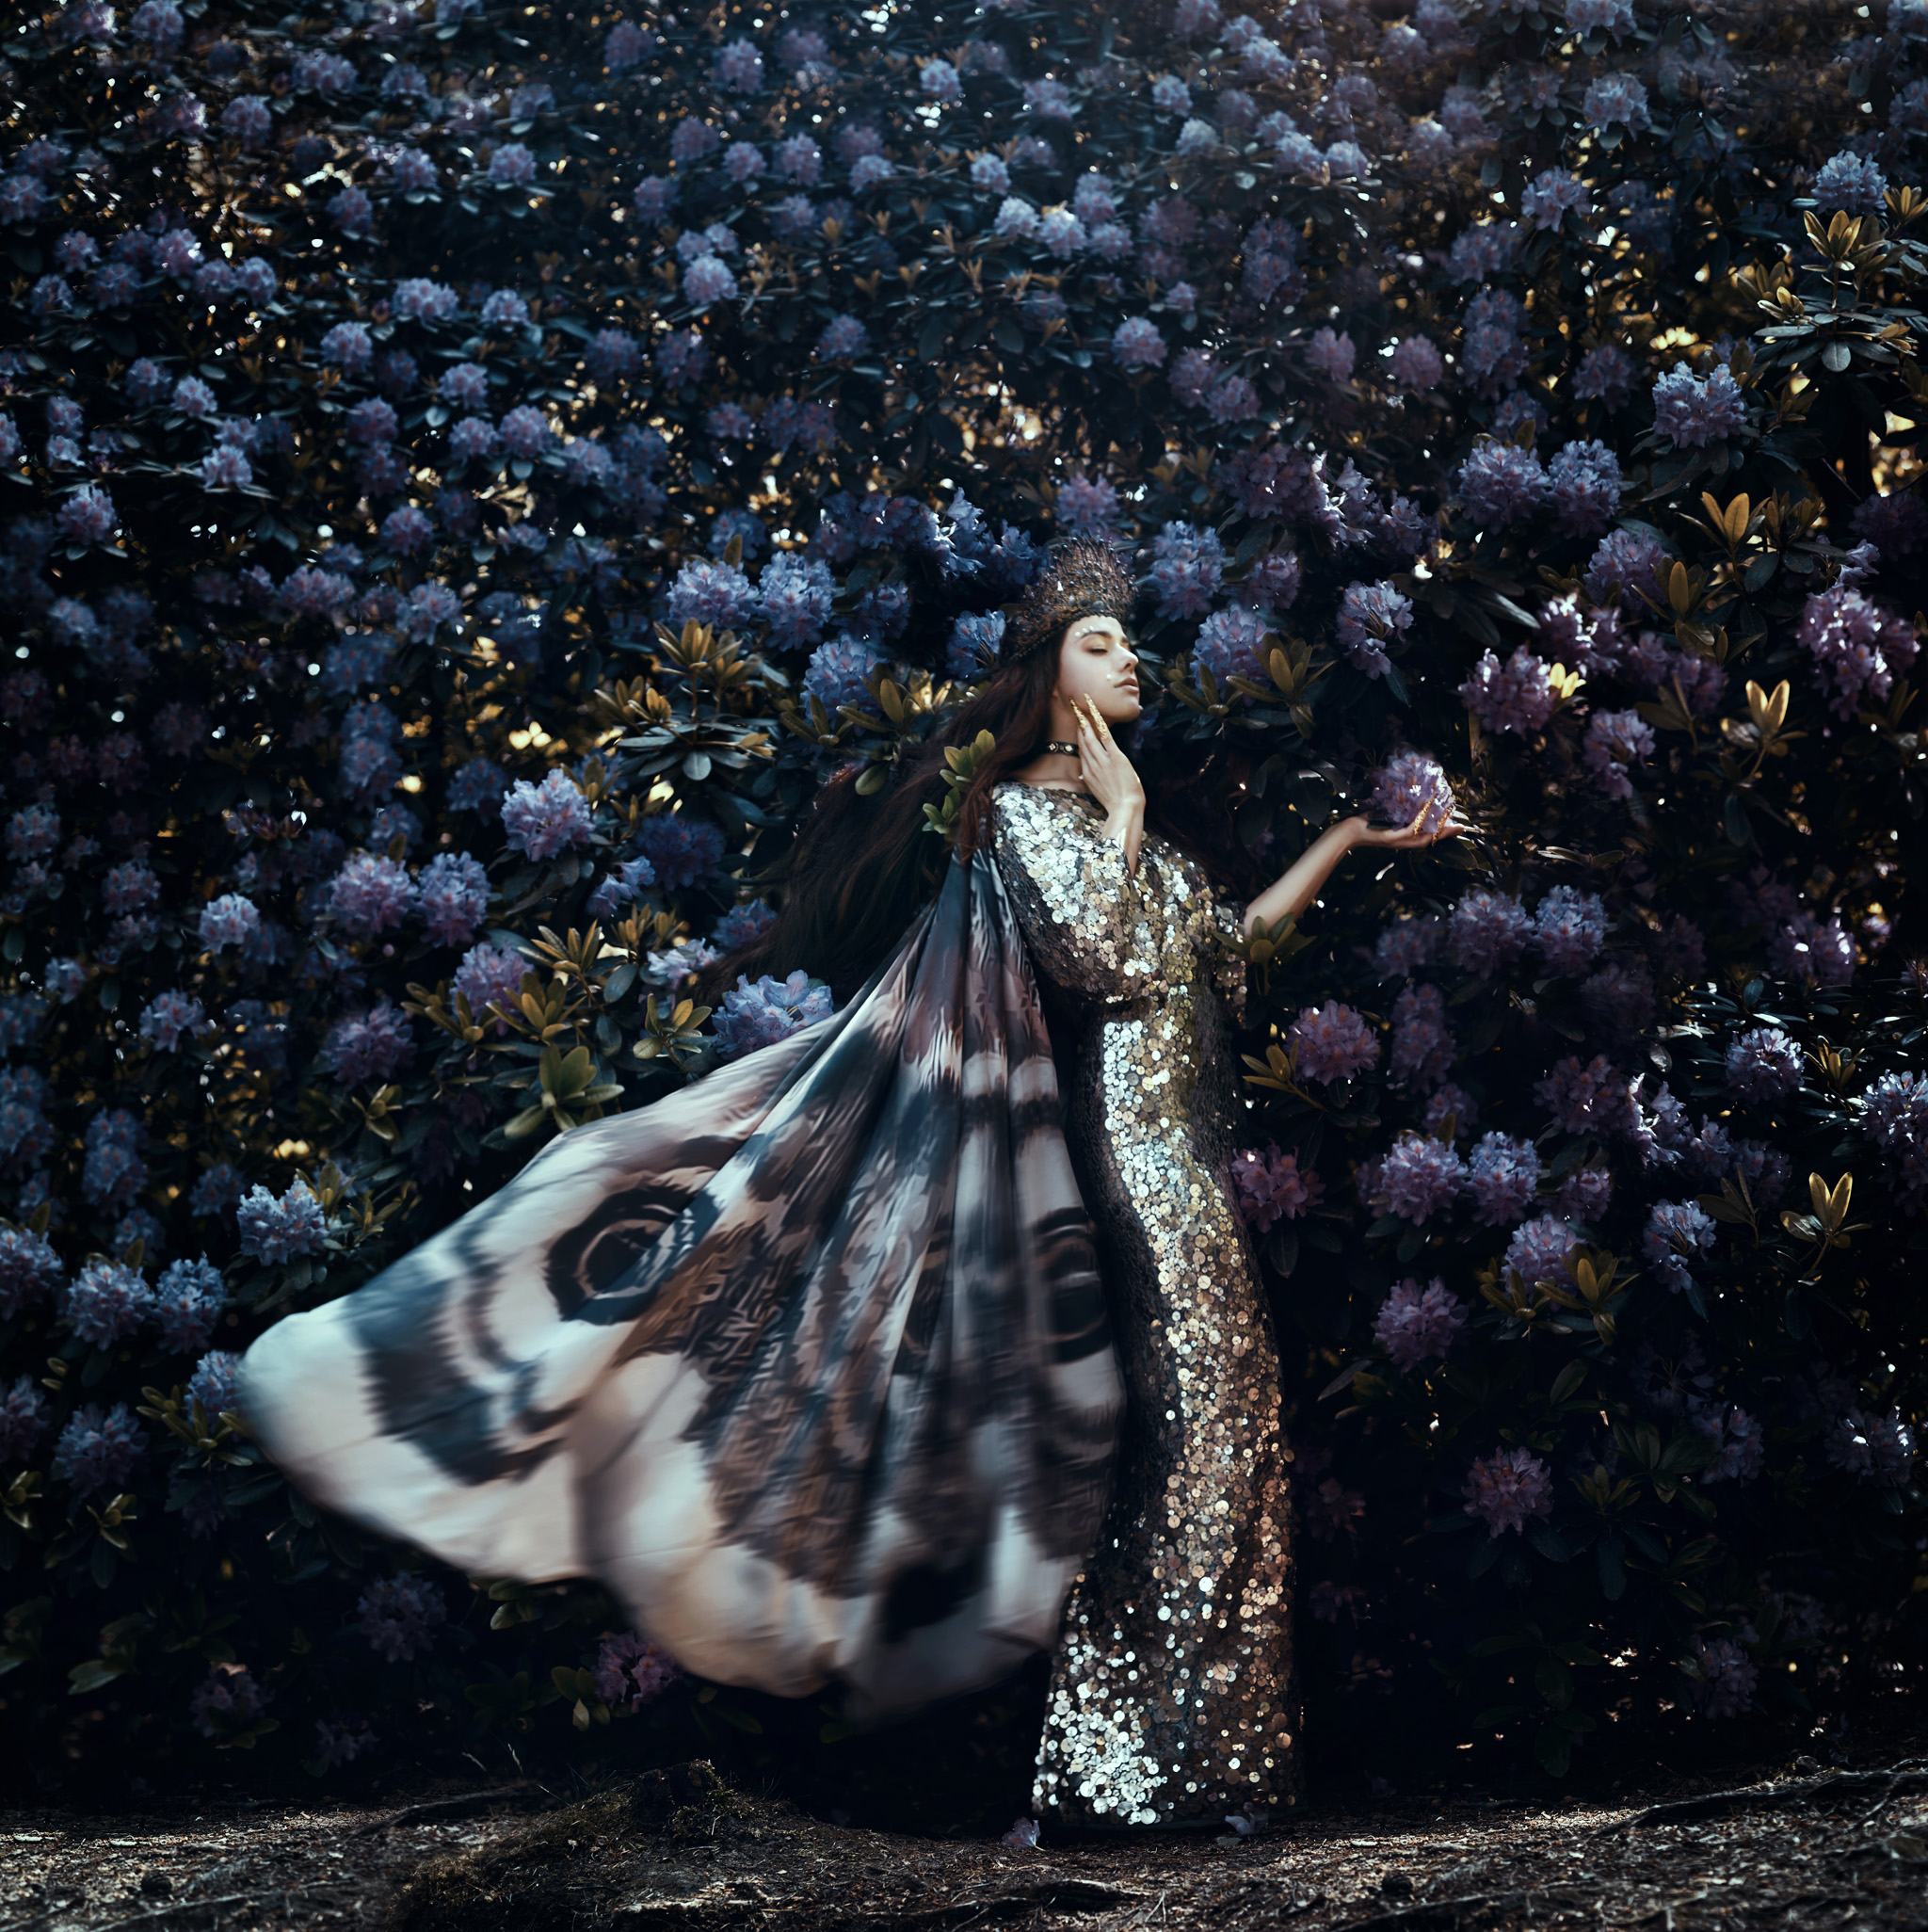 fairytale-bloom-moth-queen-royal-bella-kotak-rhododendron-magical-preraphelite-fantasy-photoshop-wings-fine-art-photography.jpg